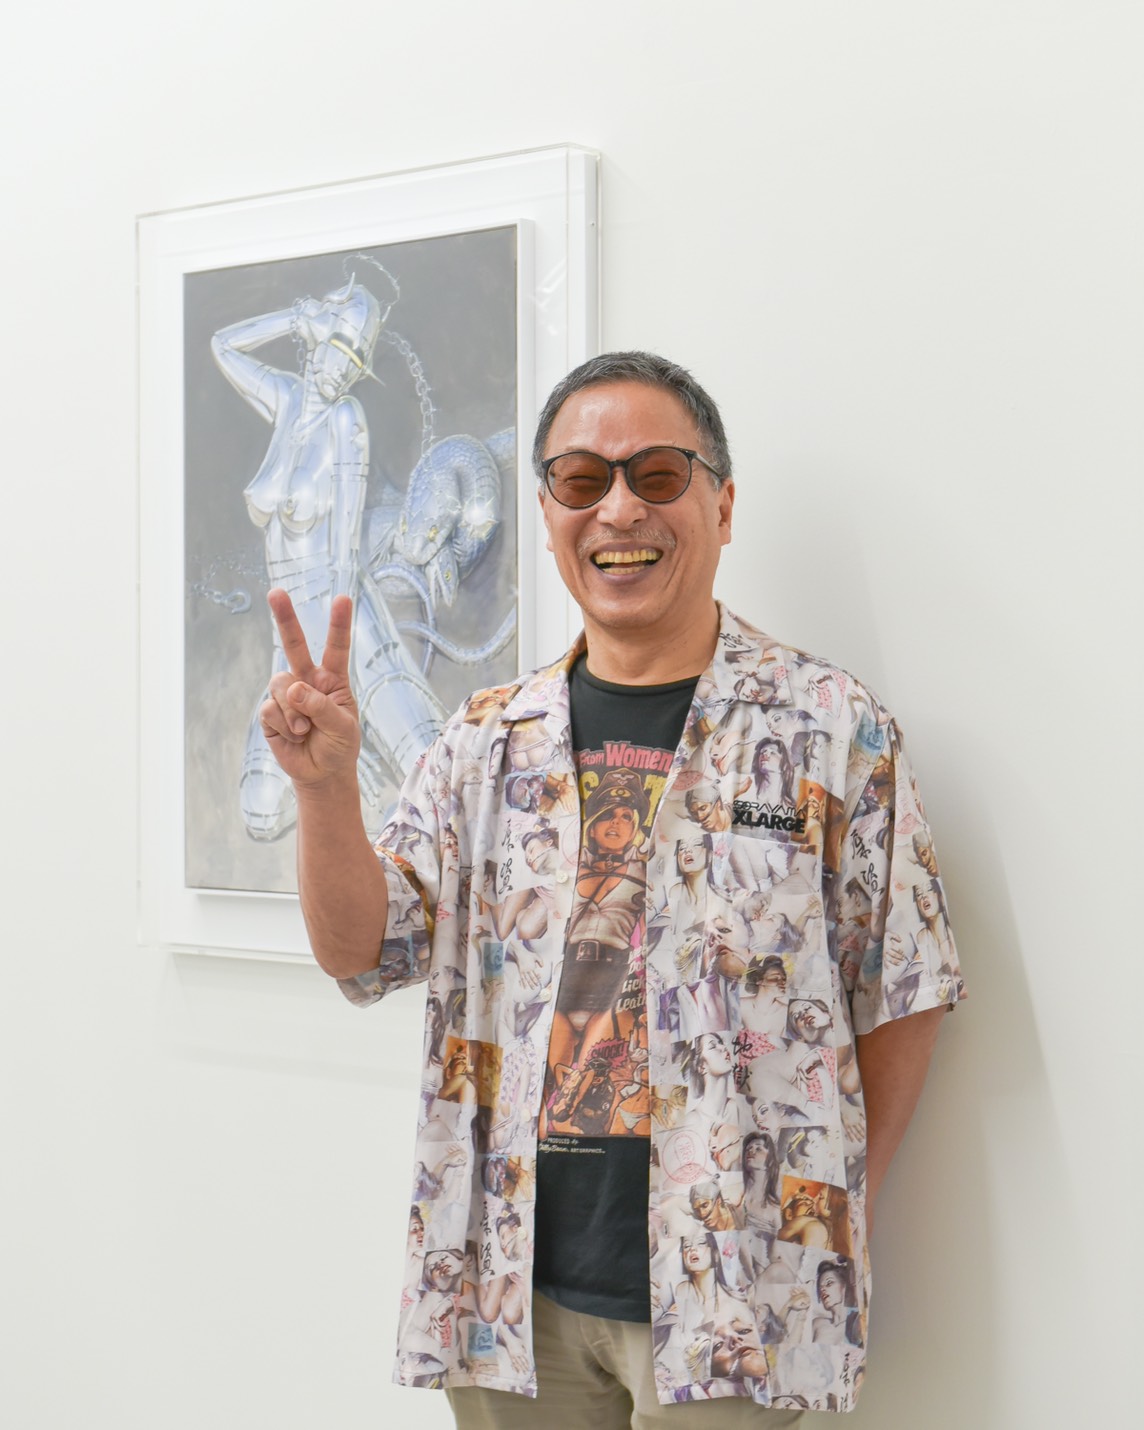 Hajime Sorayama "SEX MATTER" Collection by XLARGE